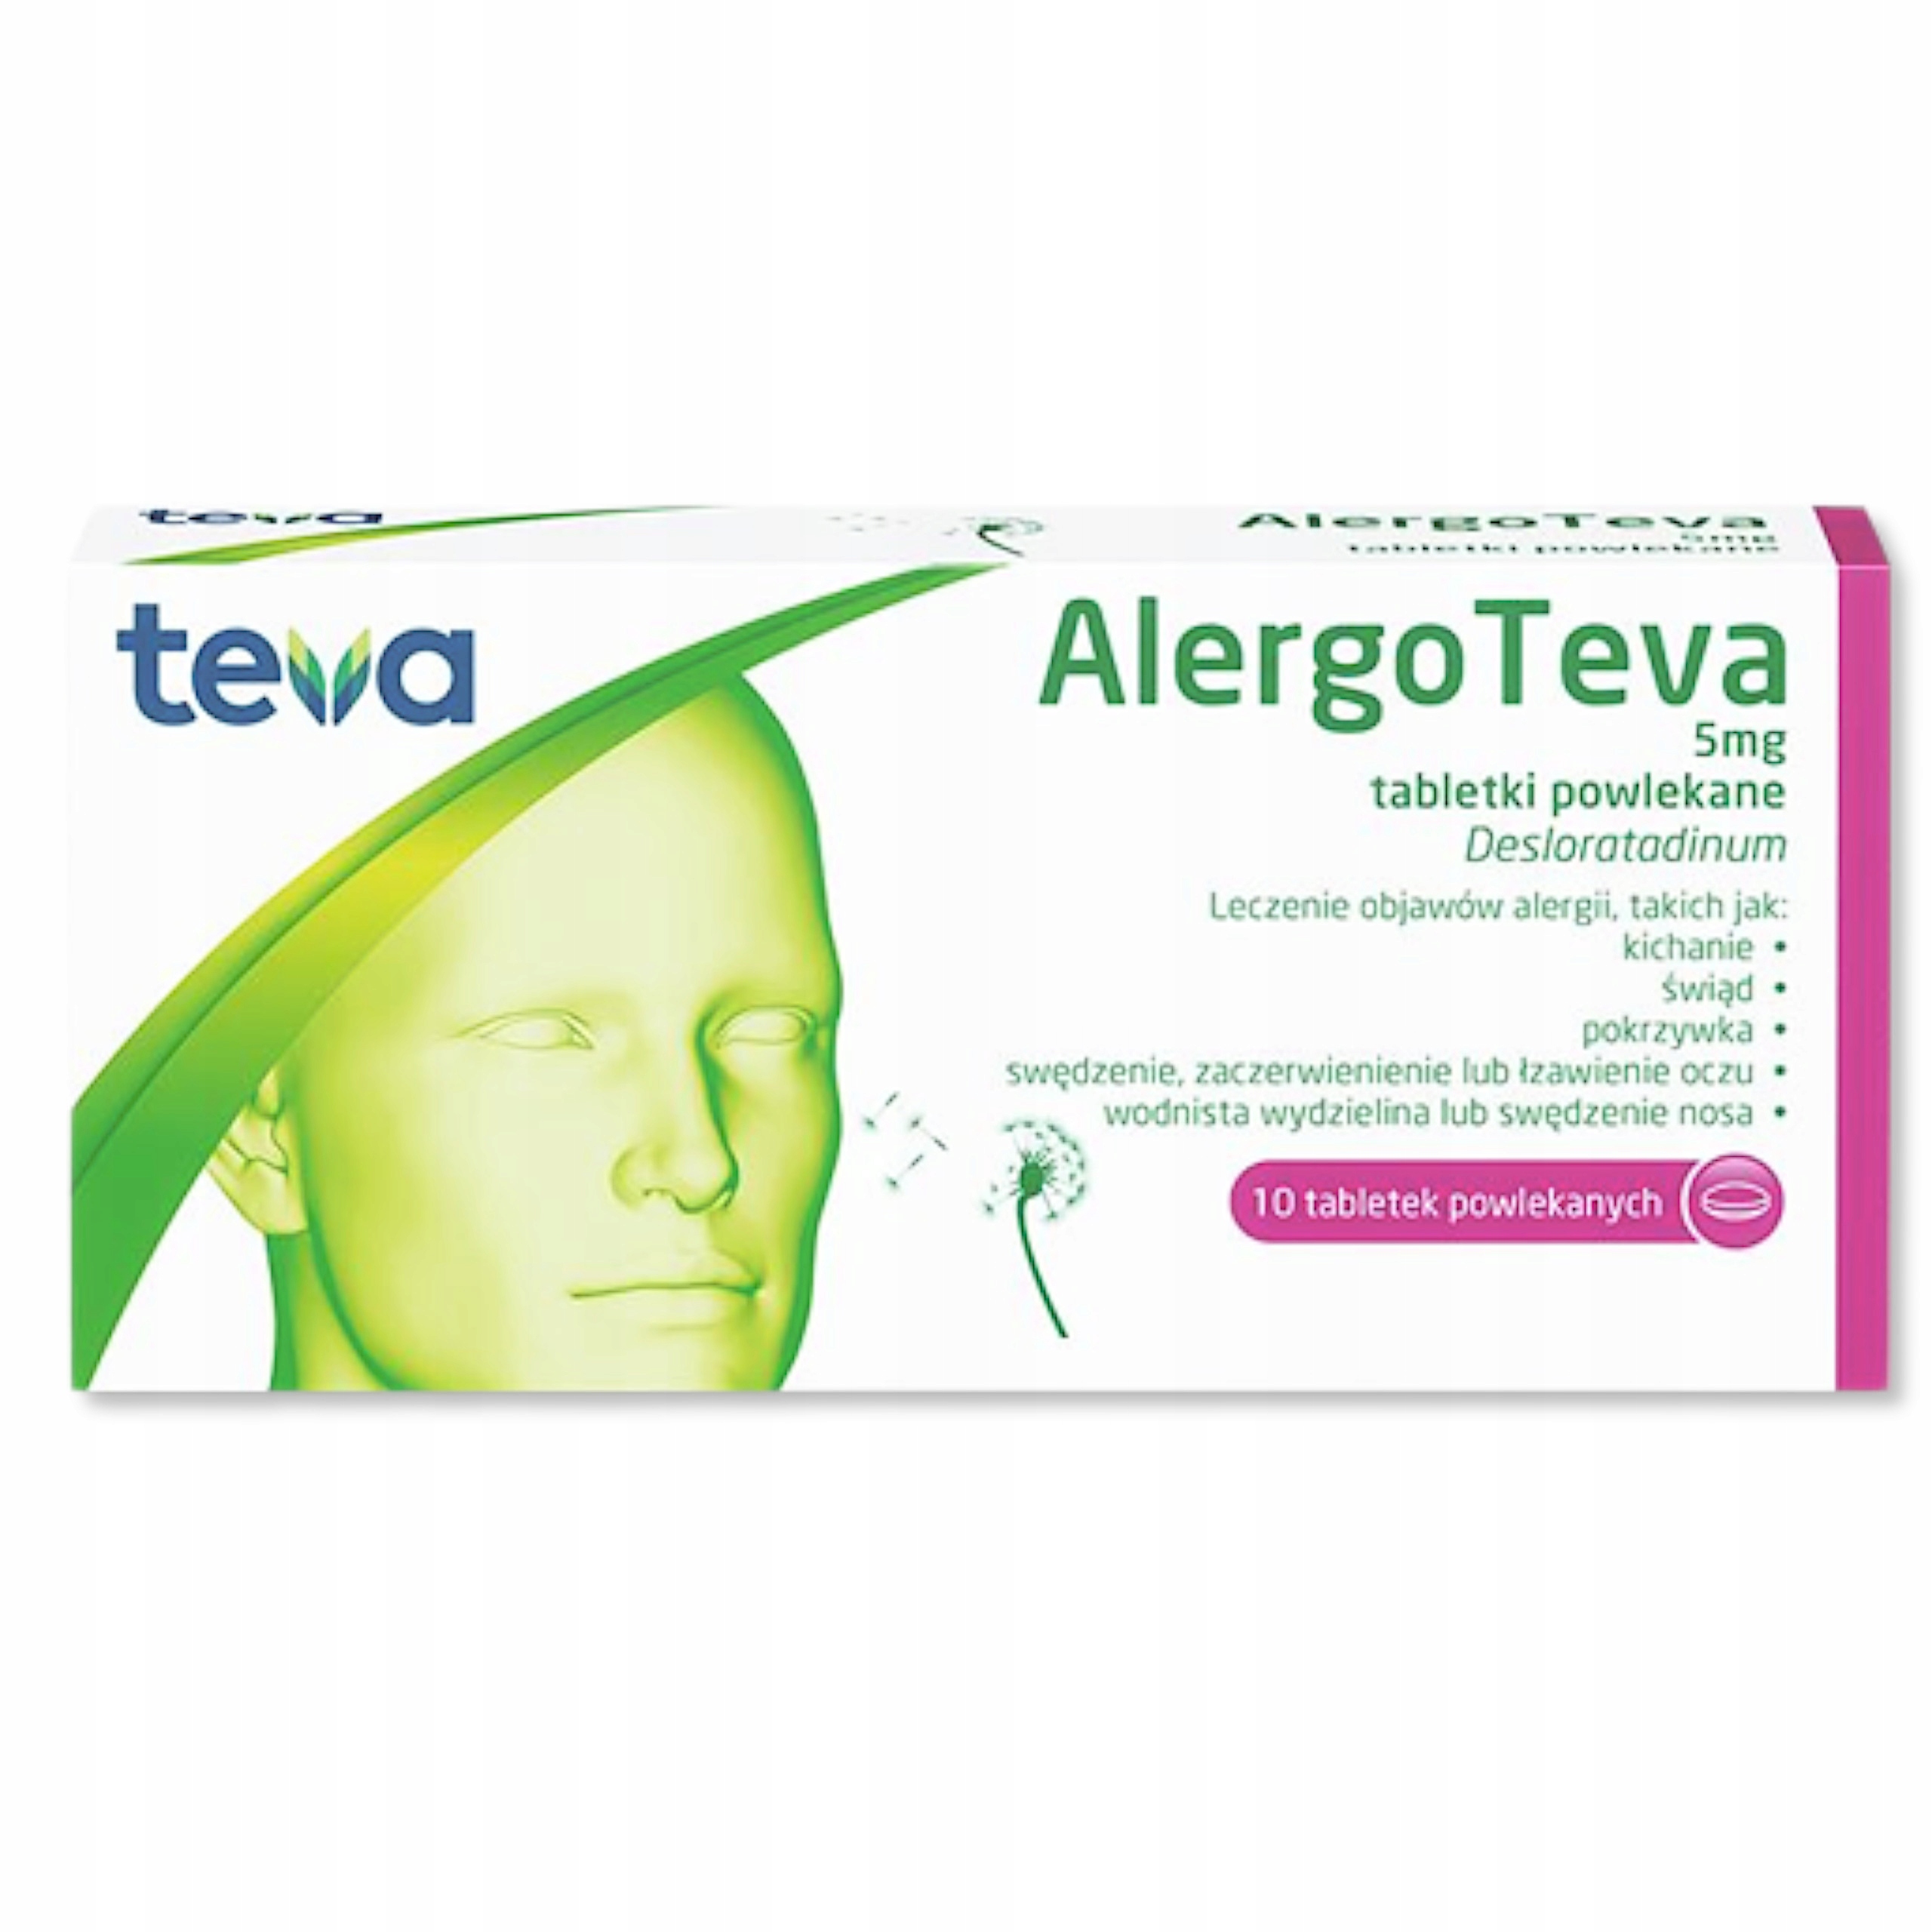 Alergo Teva 5 mg, 10 tabletek powlekanych 13669453633 - Allegro.pl